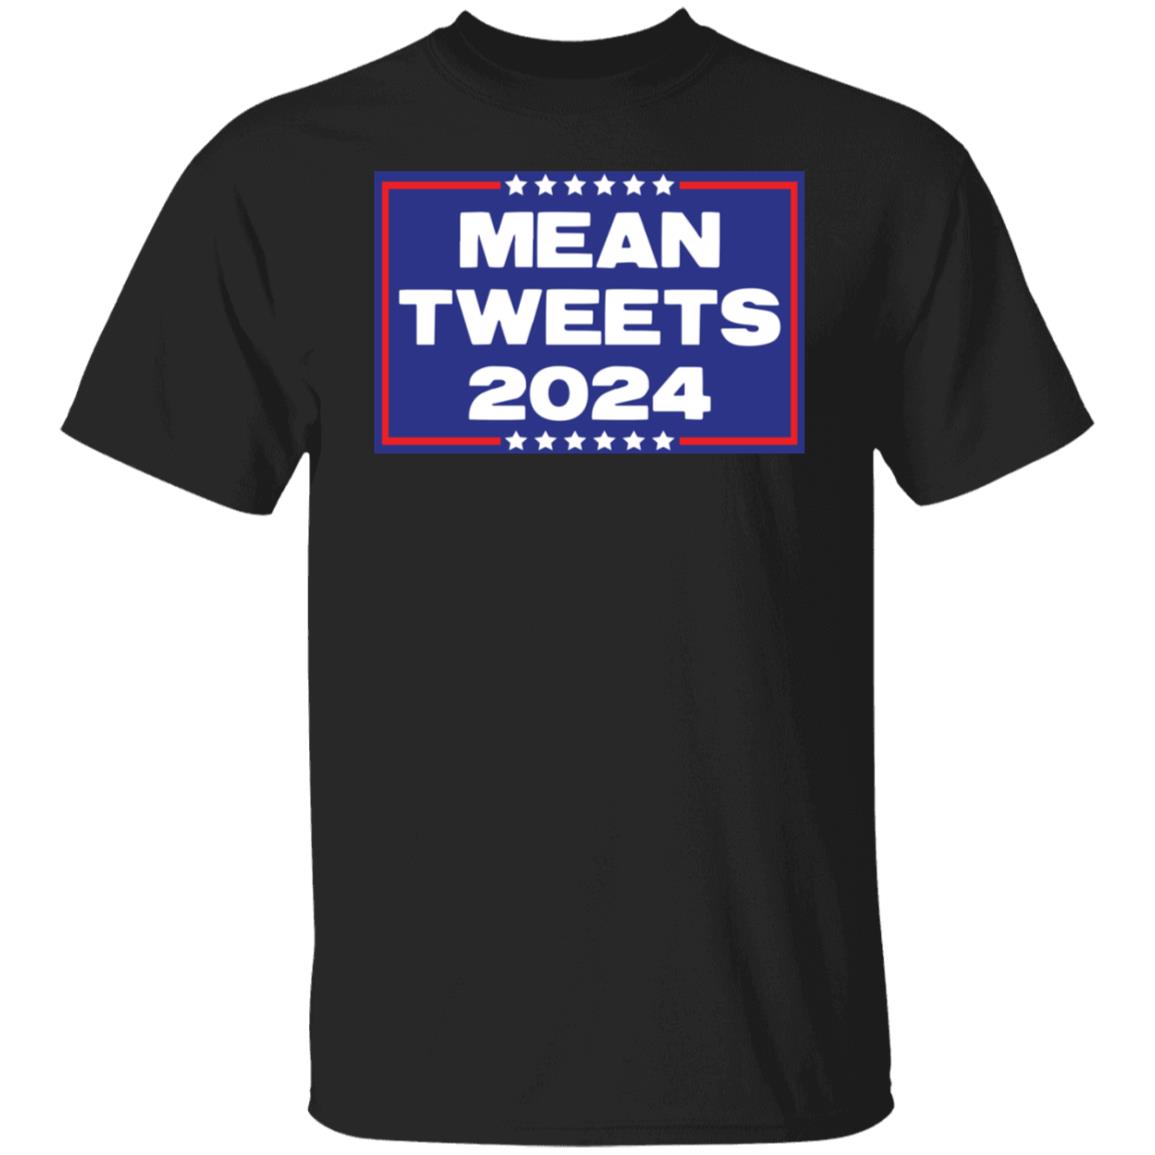 Mean tweets 2024 shirt 1